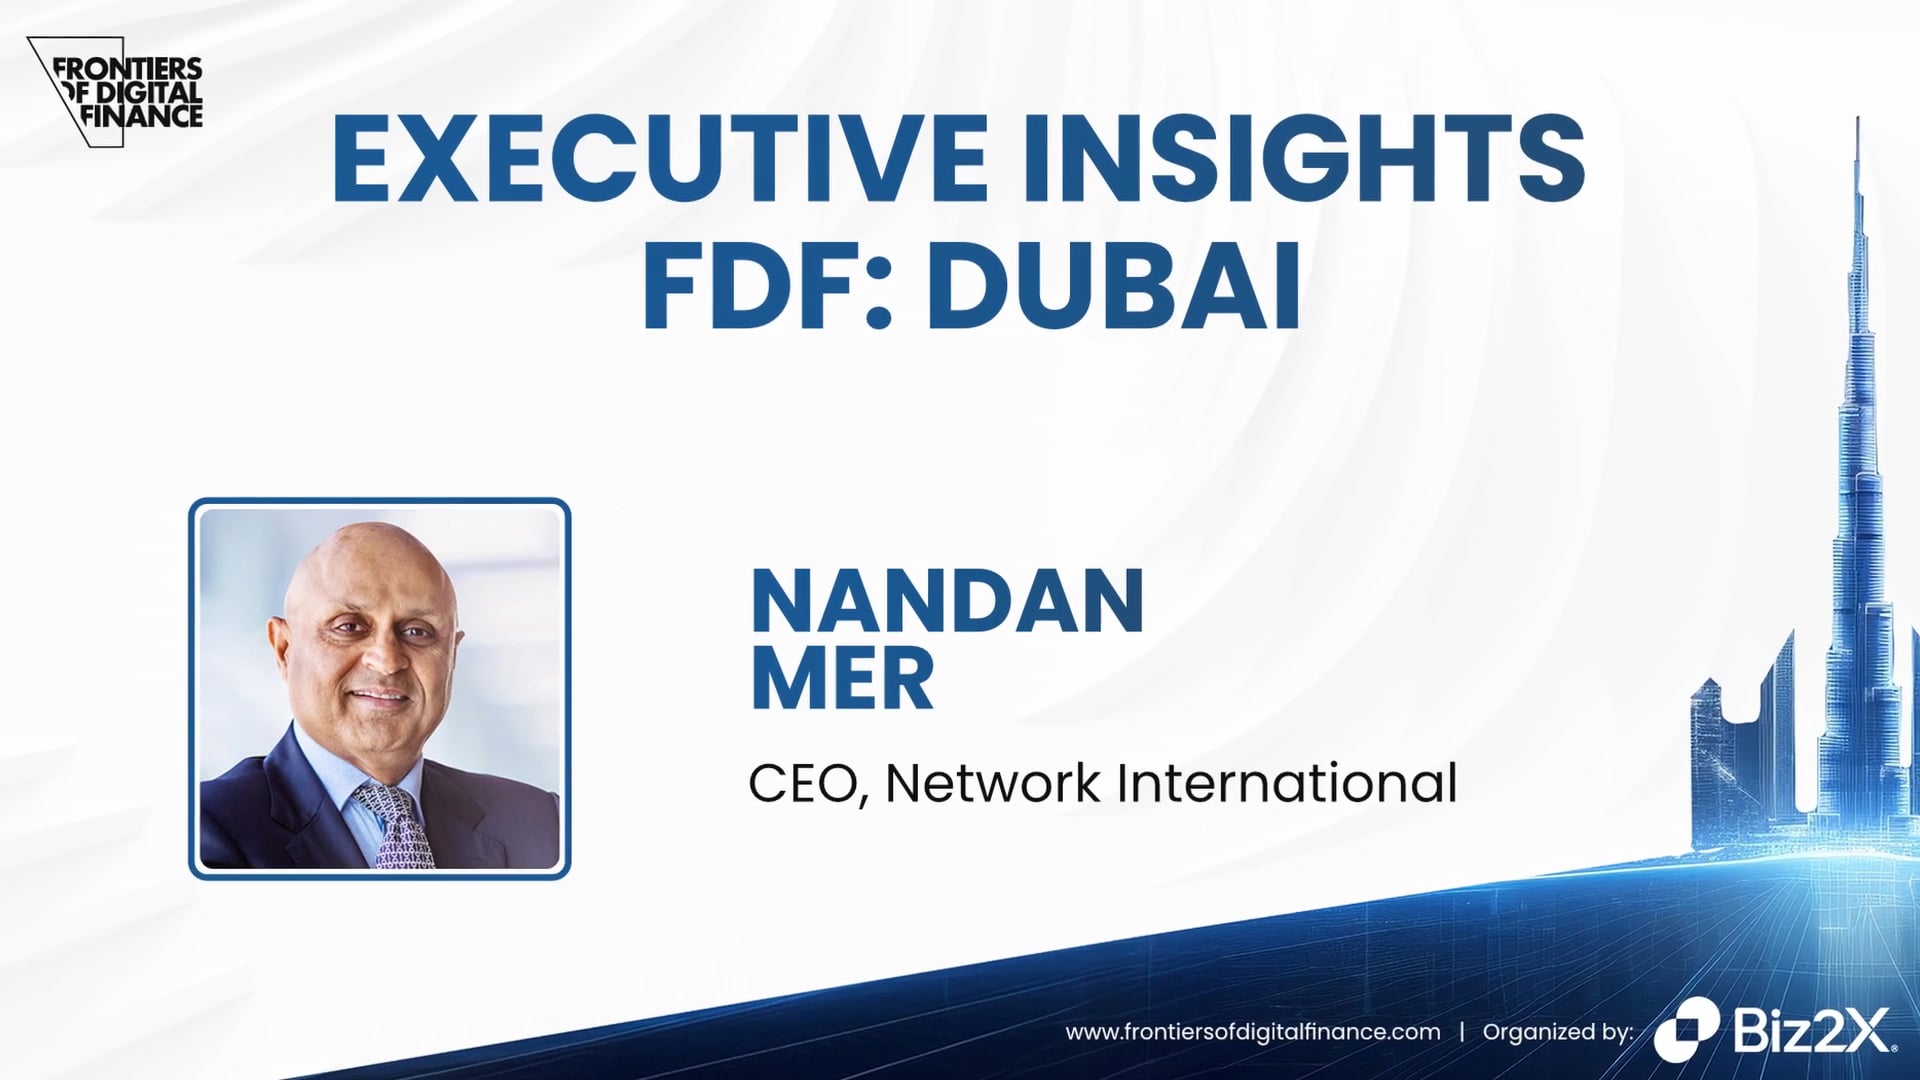 Nandan Mer from Network International